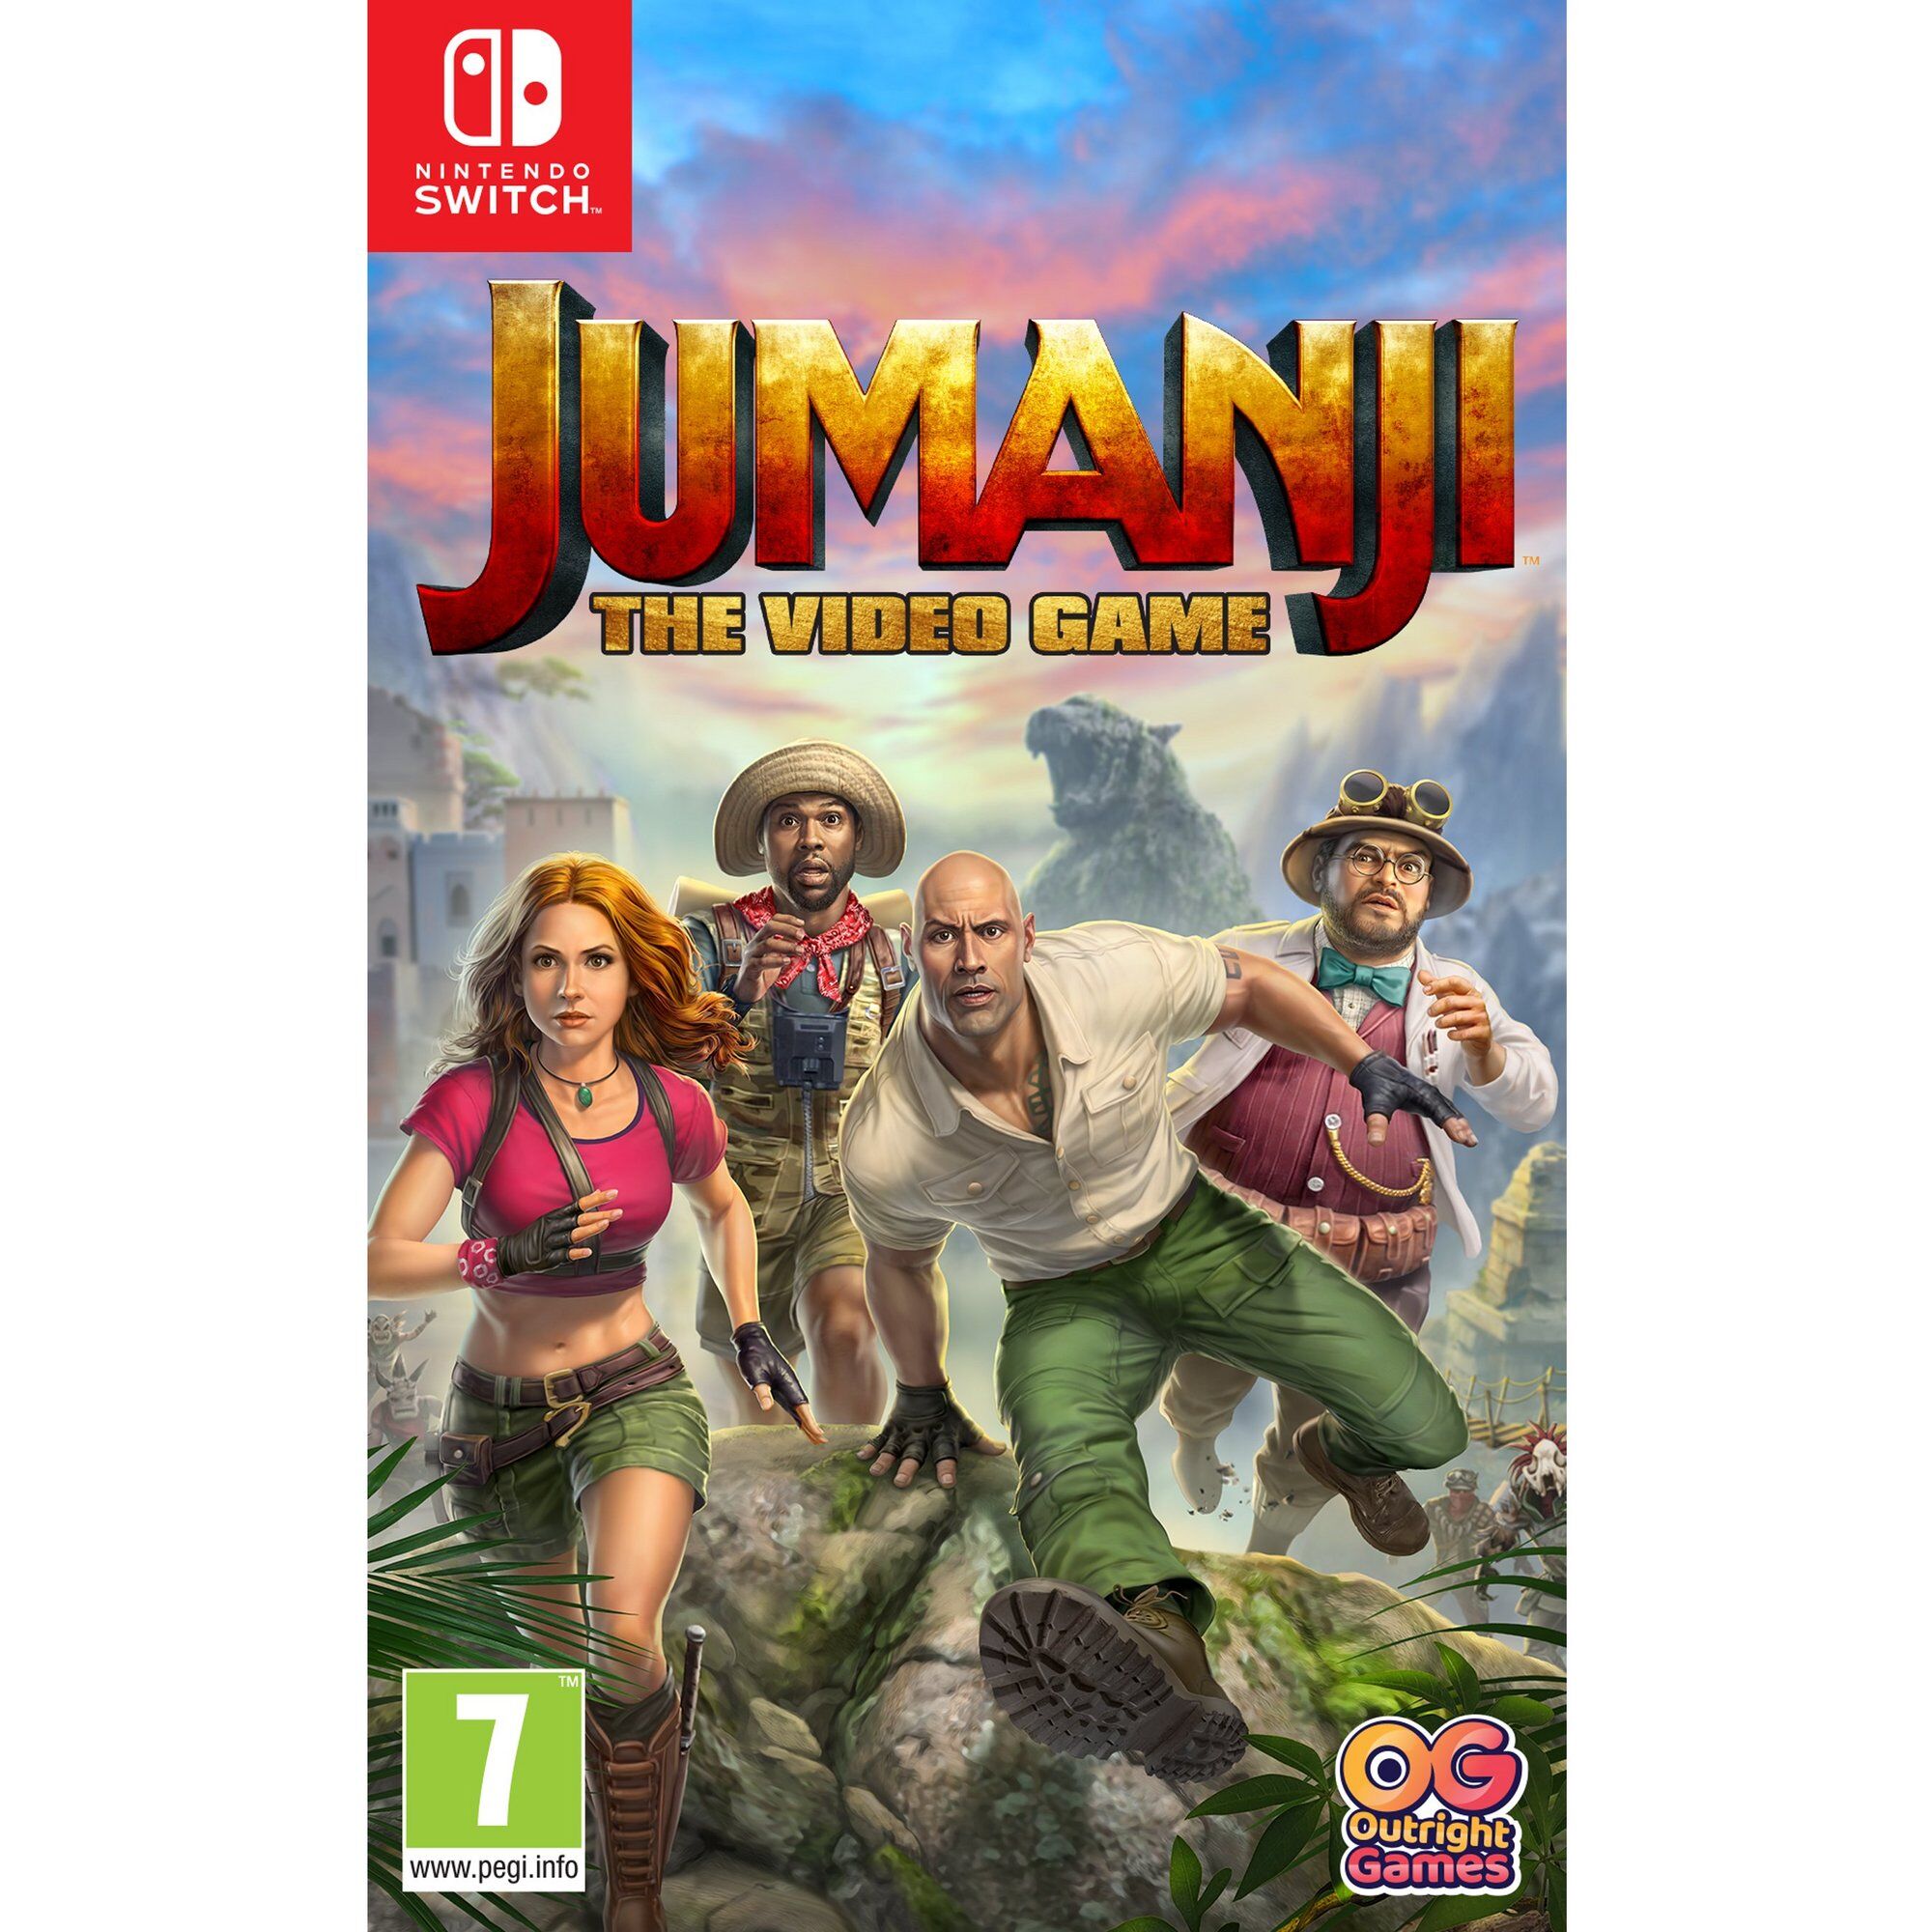 Nintendo Switch: Jumanji The Video Game